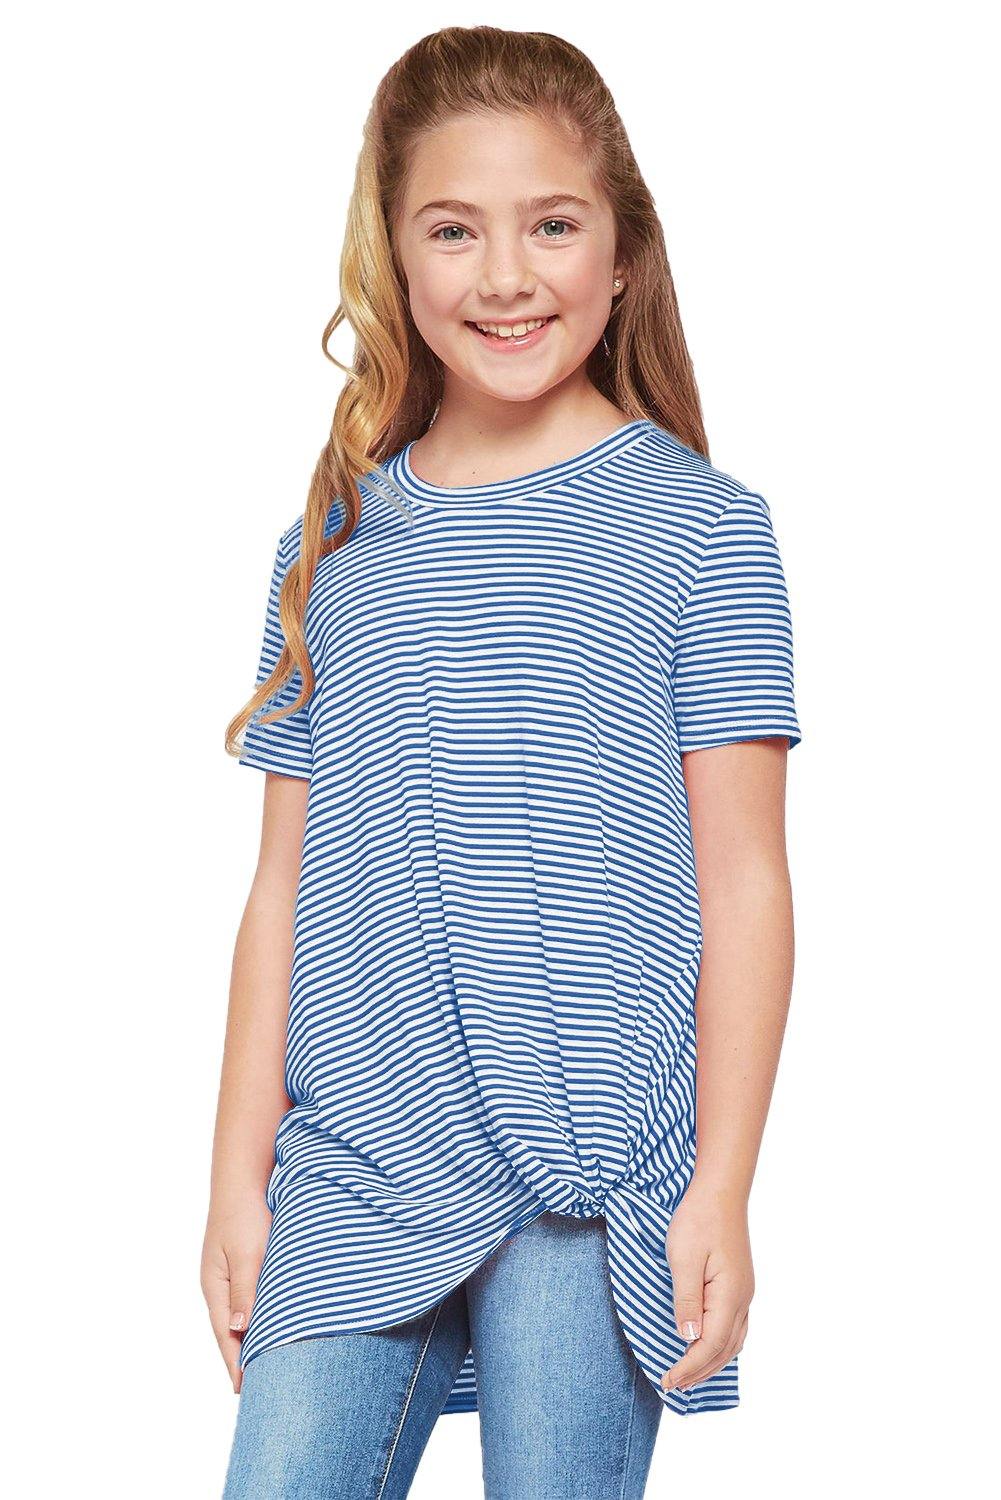 Short Sleeve Front Twist Striped Girl's Top - L & M Kee, LLC